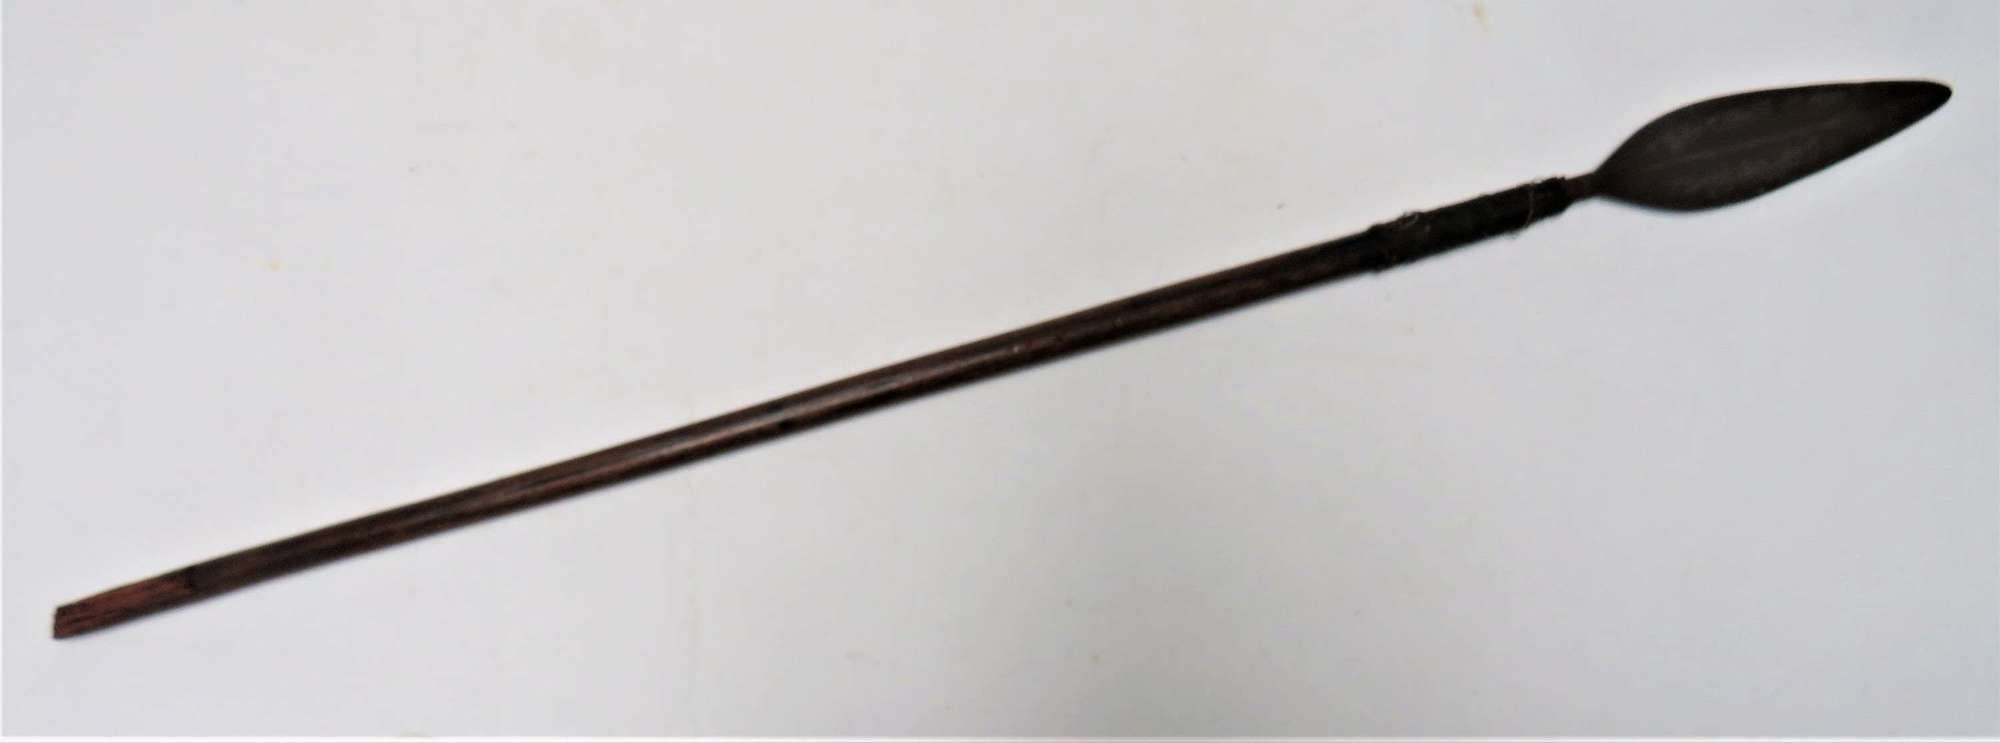 Late 19th Century Zulu Assegai Throwing Spear